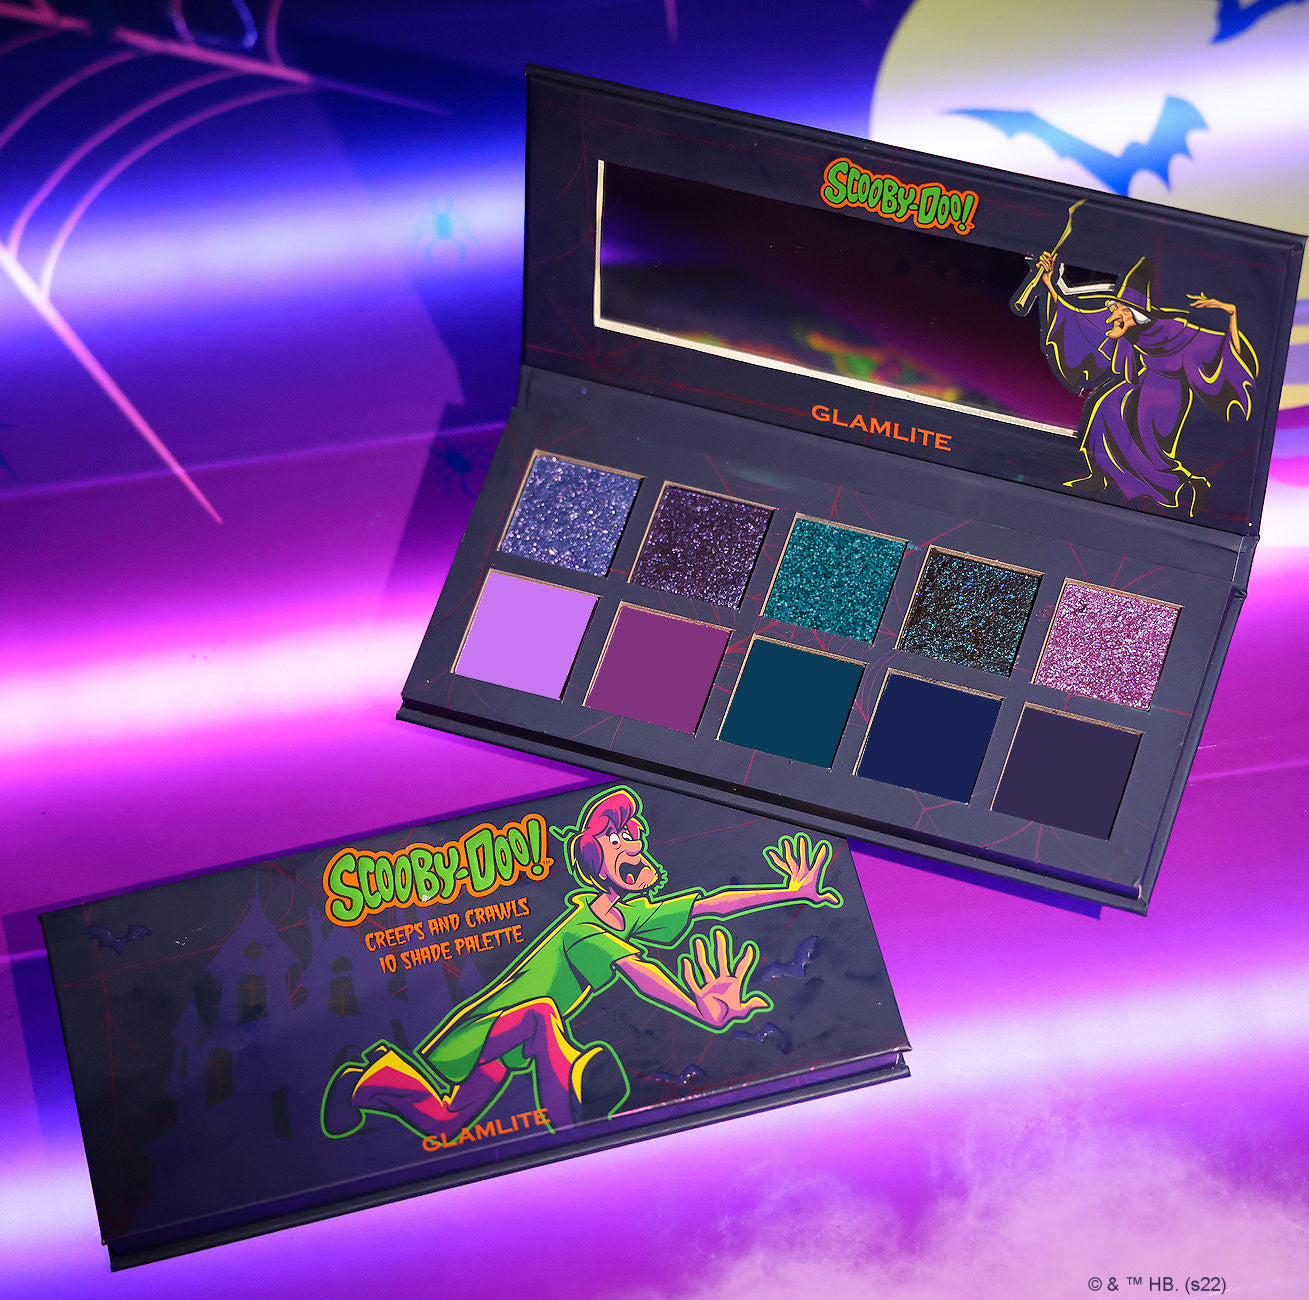 Scooby-Doo™ x Glamlite "Creeps and Crawls" eyeshadow palette